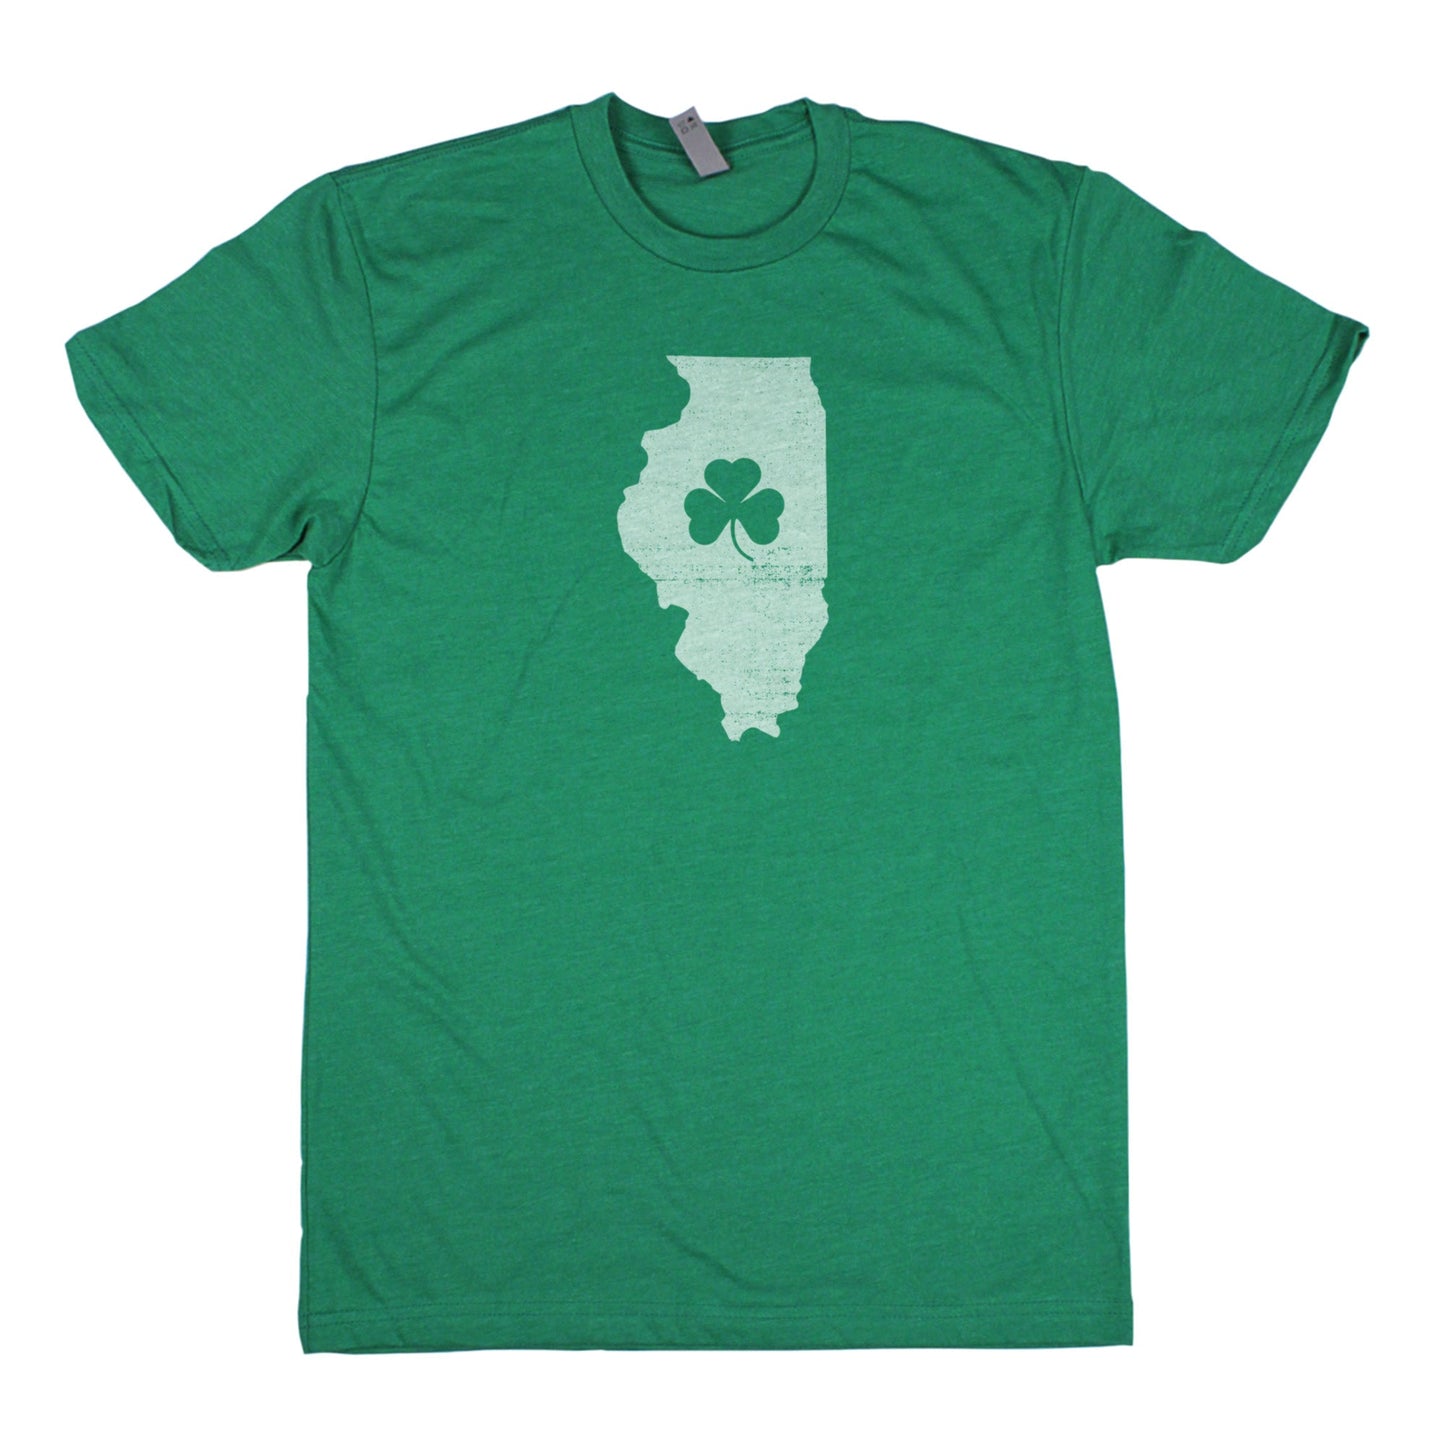 Shamrock Men's Unisex T-Shirt - Illinois